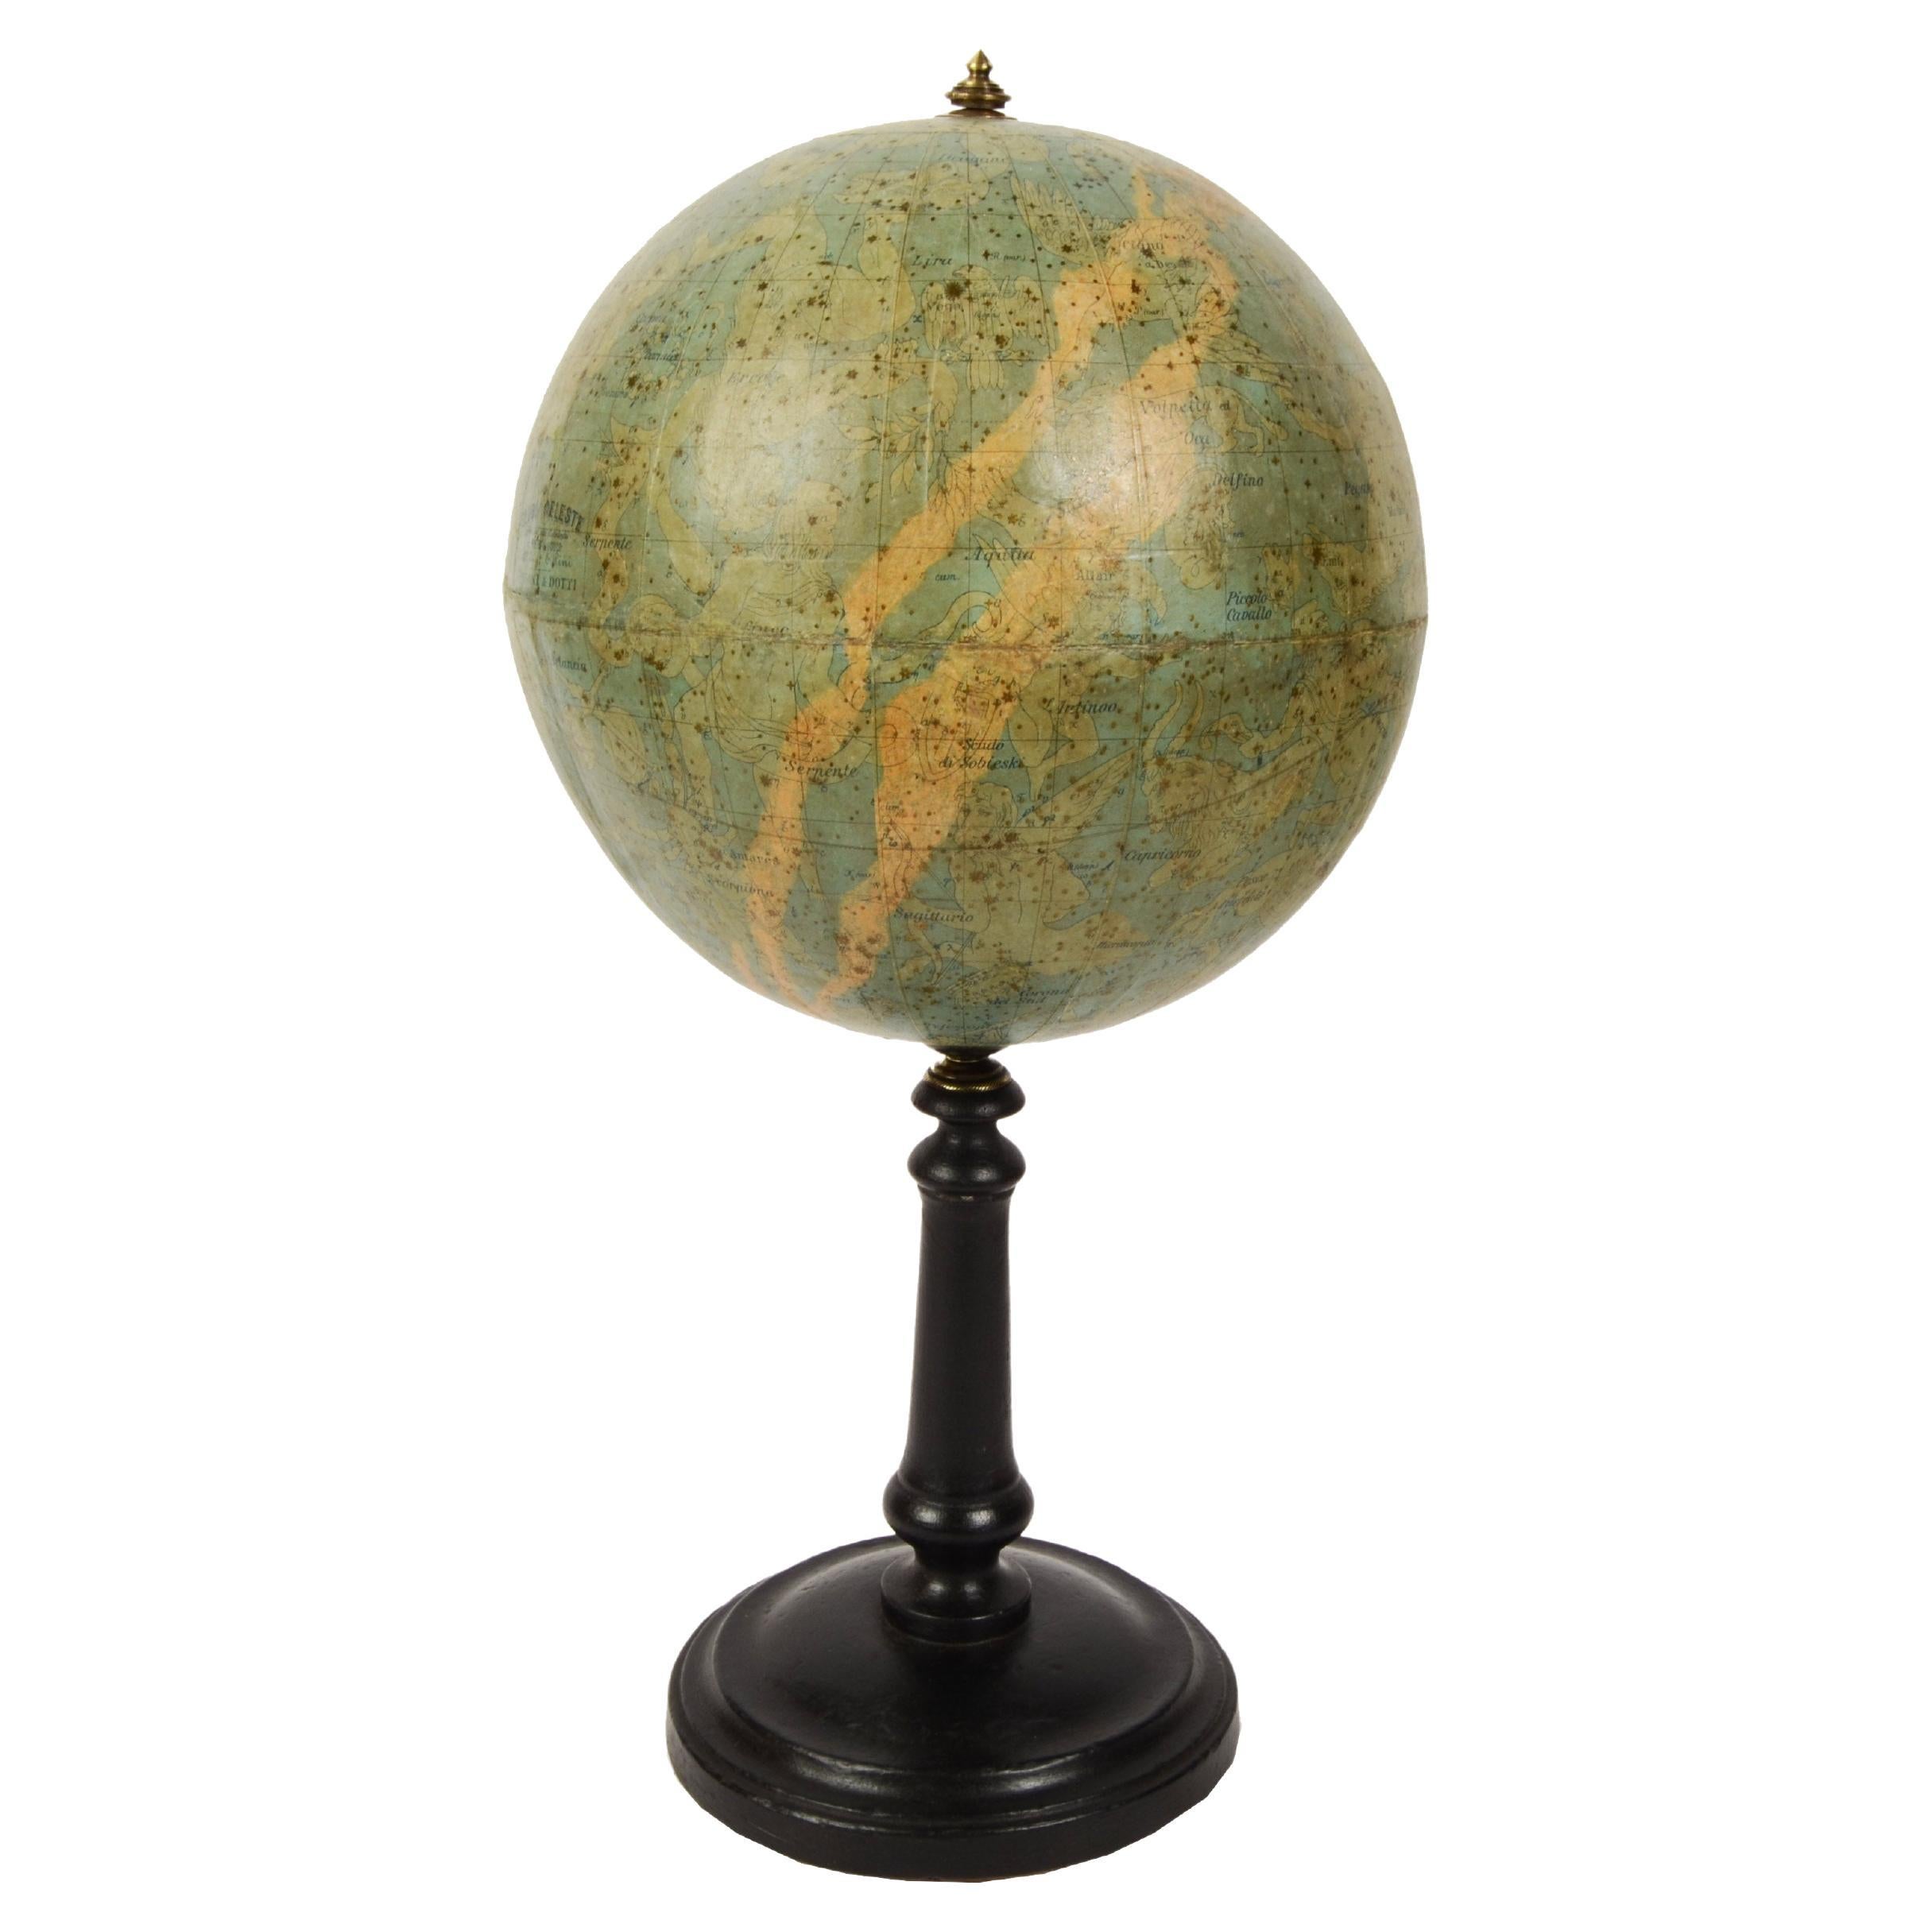 1889er Jahre Antike Celestial Globe signiert Gussoni e Dotti Milano Papier Maché Kugel